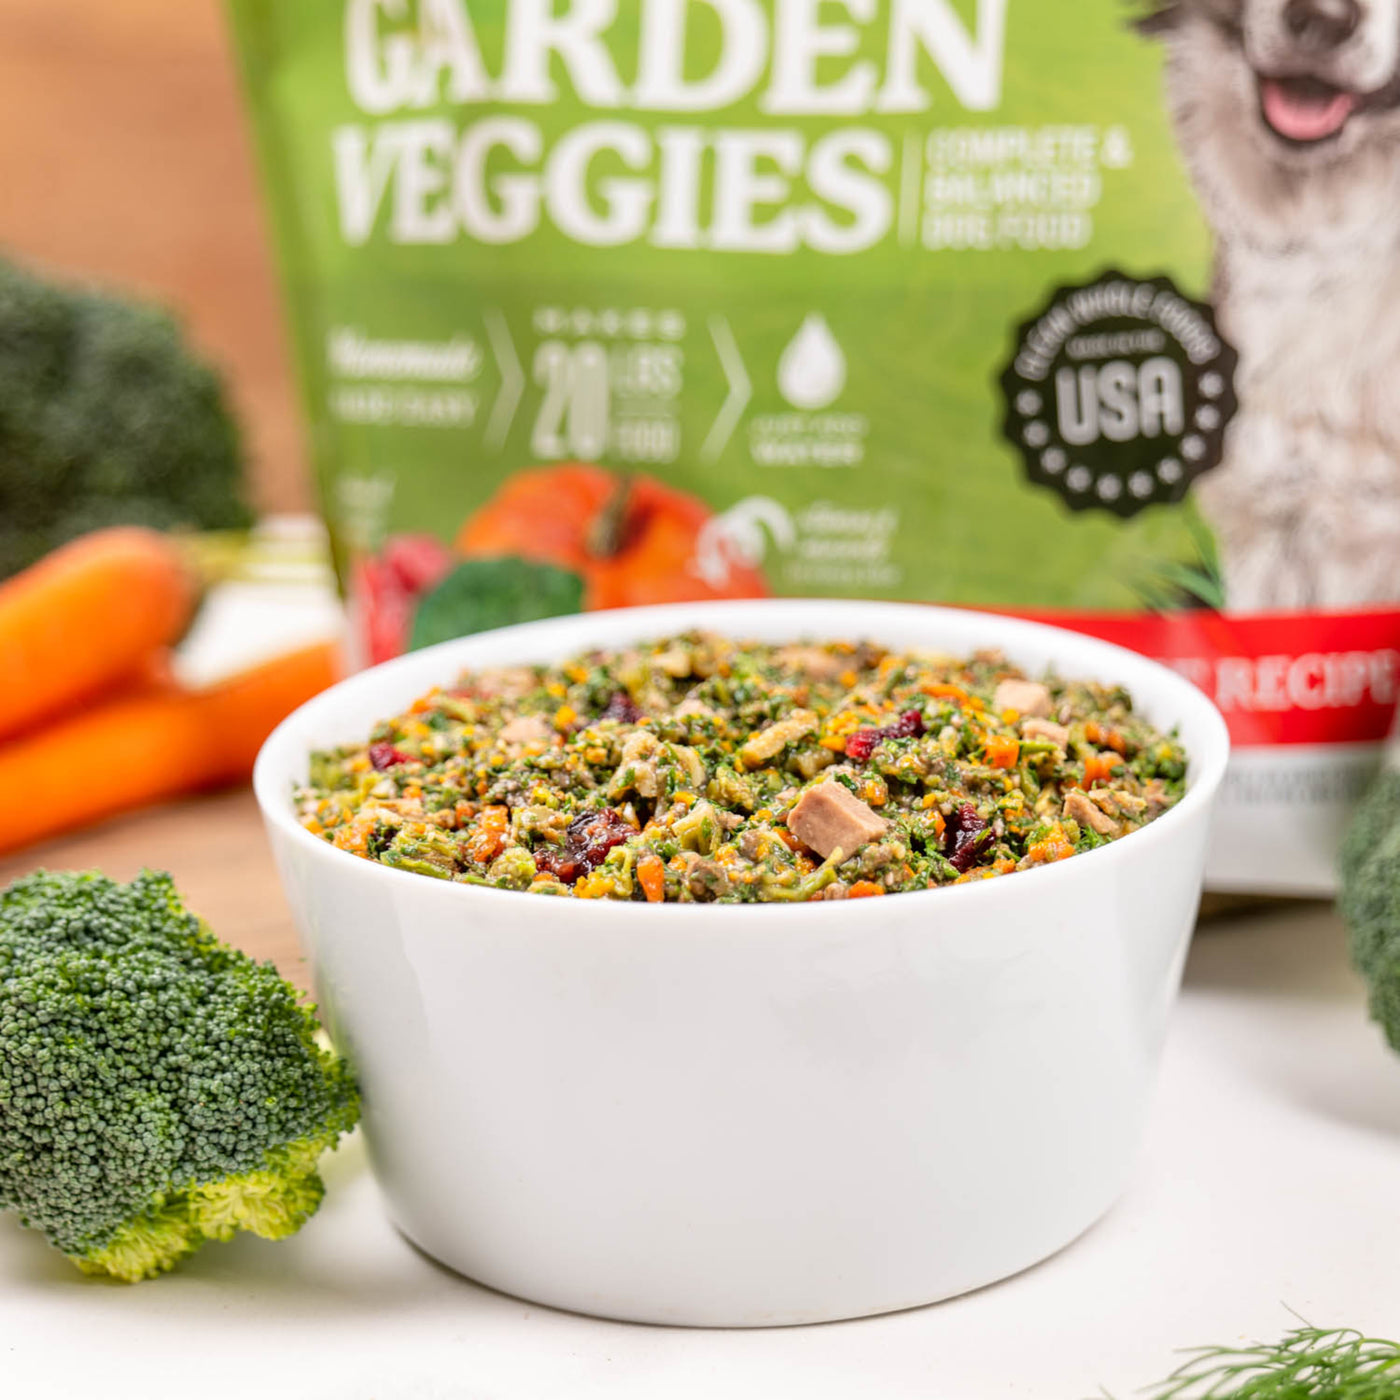 Dr. Harvey's Dog Food - Garden Veggies Whole Grain Chicken *